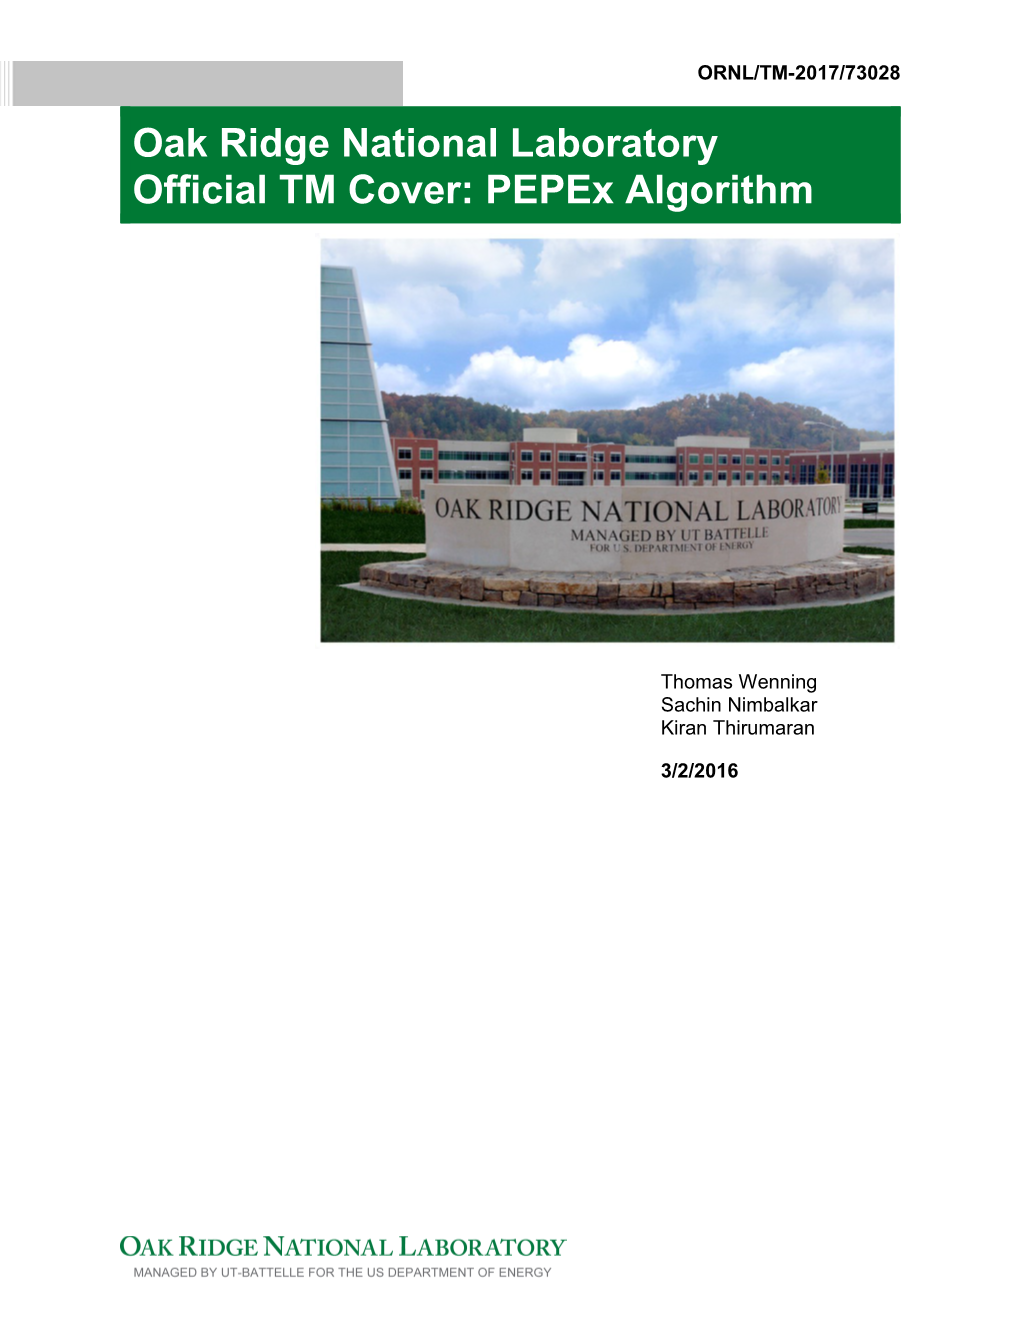 Oak Ridge National Laboratory Official TM Cover: Pepex Algorithm